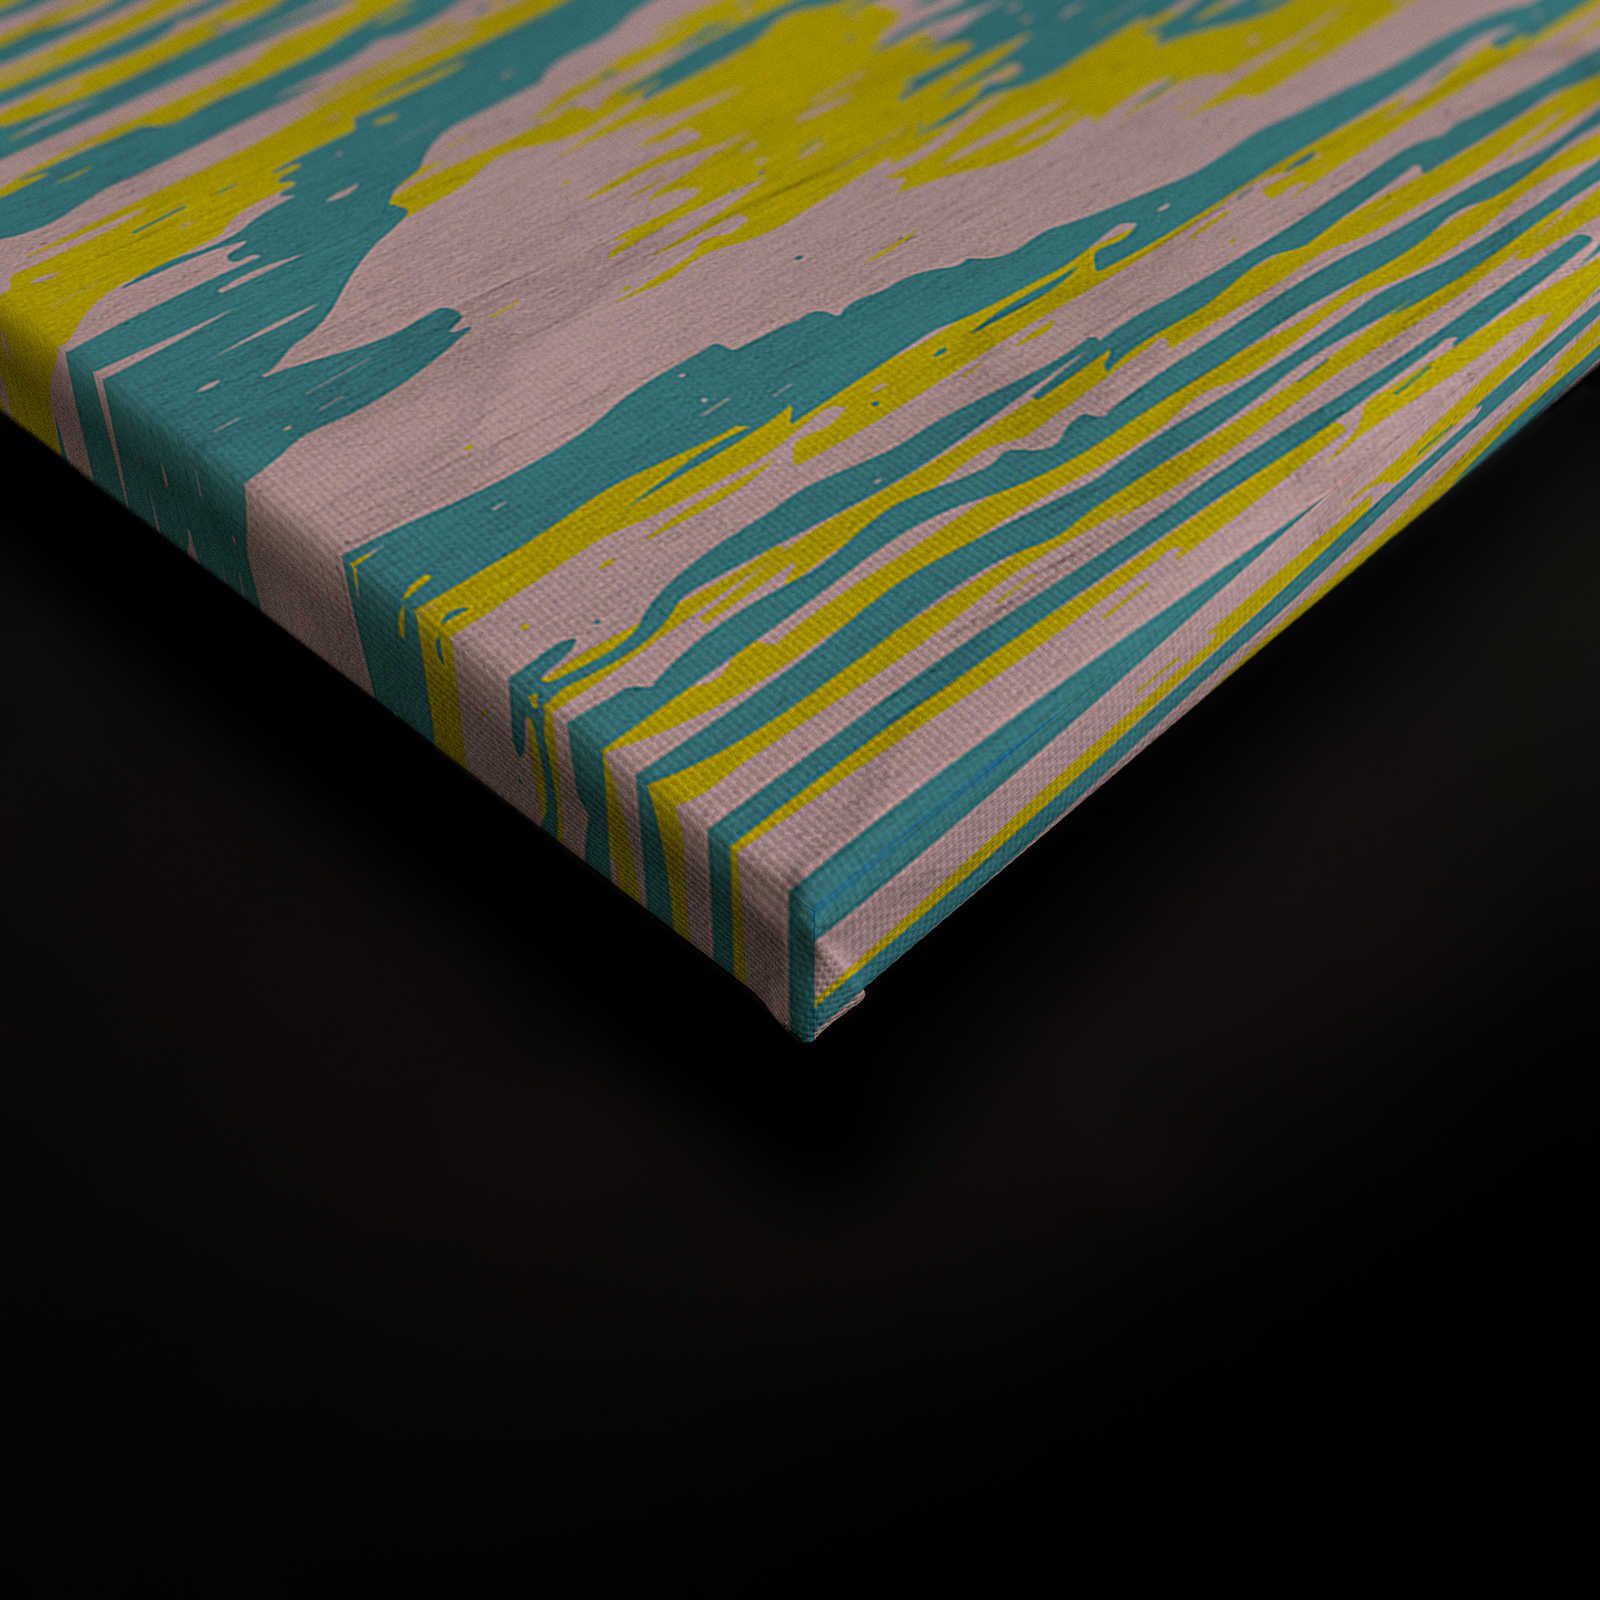             Bounty 3 - Leinwandbild Gelb & Blau mit Holzoptik Design – 0,90 m x 0,60 m
        